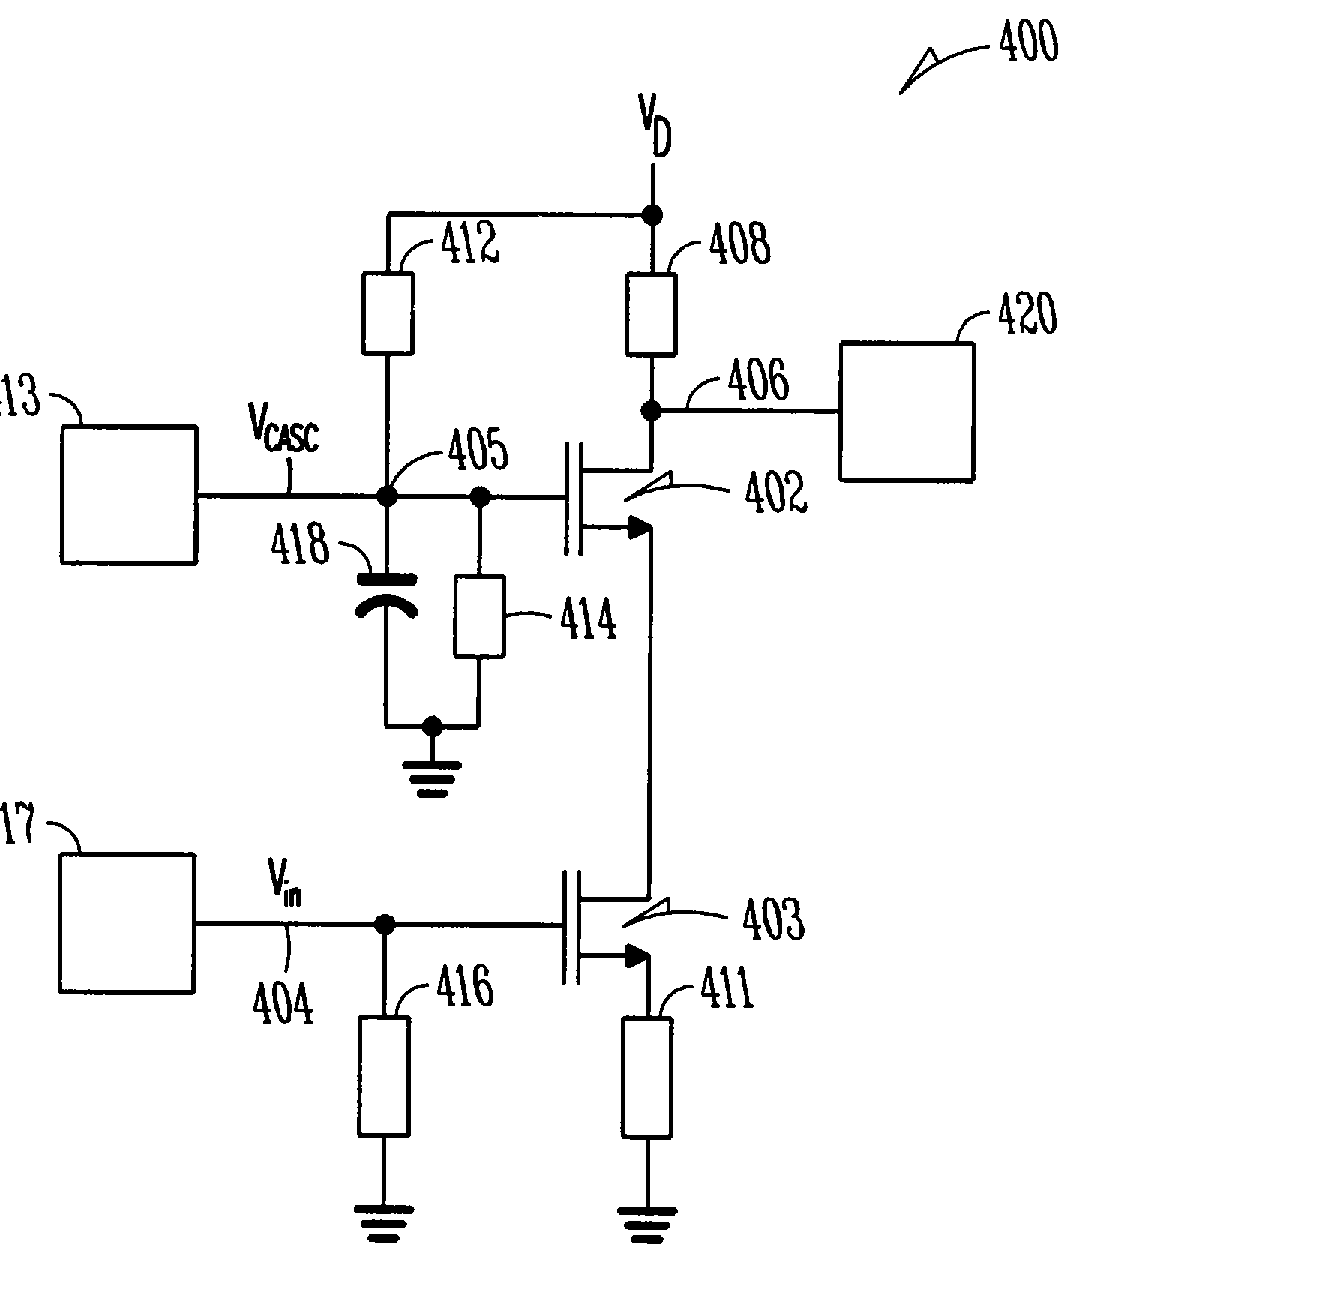 Mugfet circuit for increasing output resistance